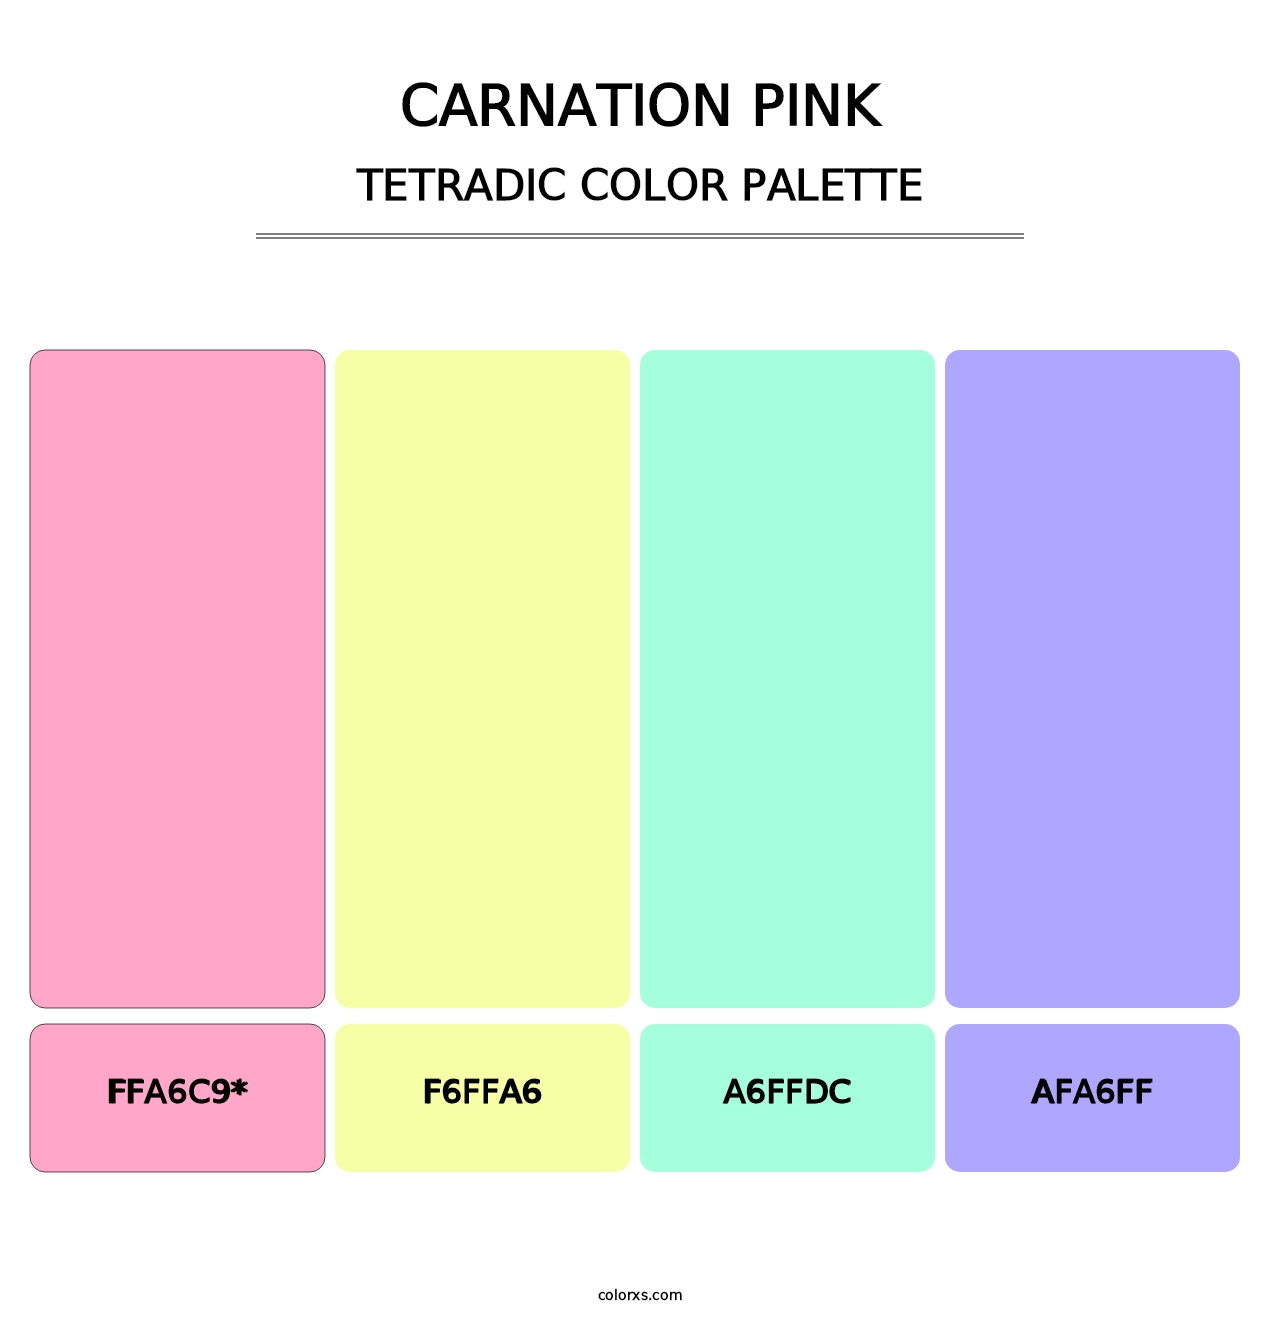 Carnation Pink - Tetradic Color Palette